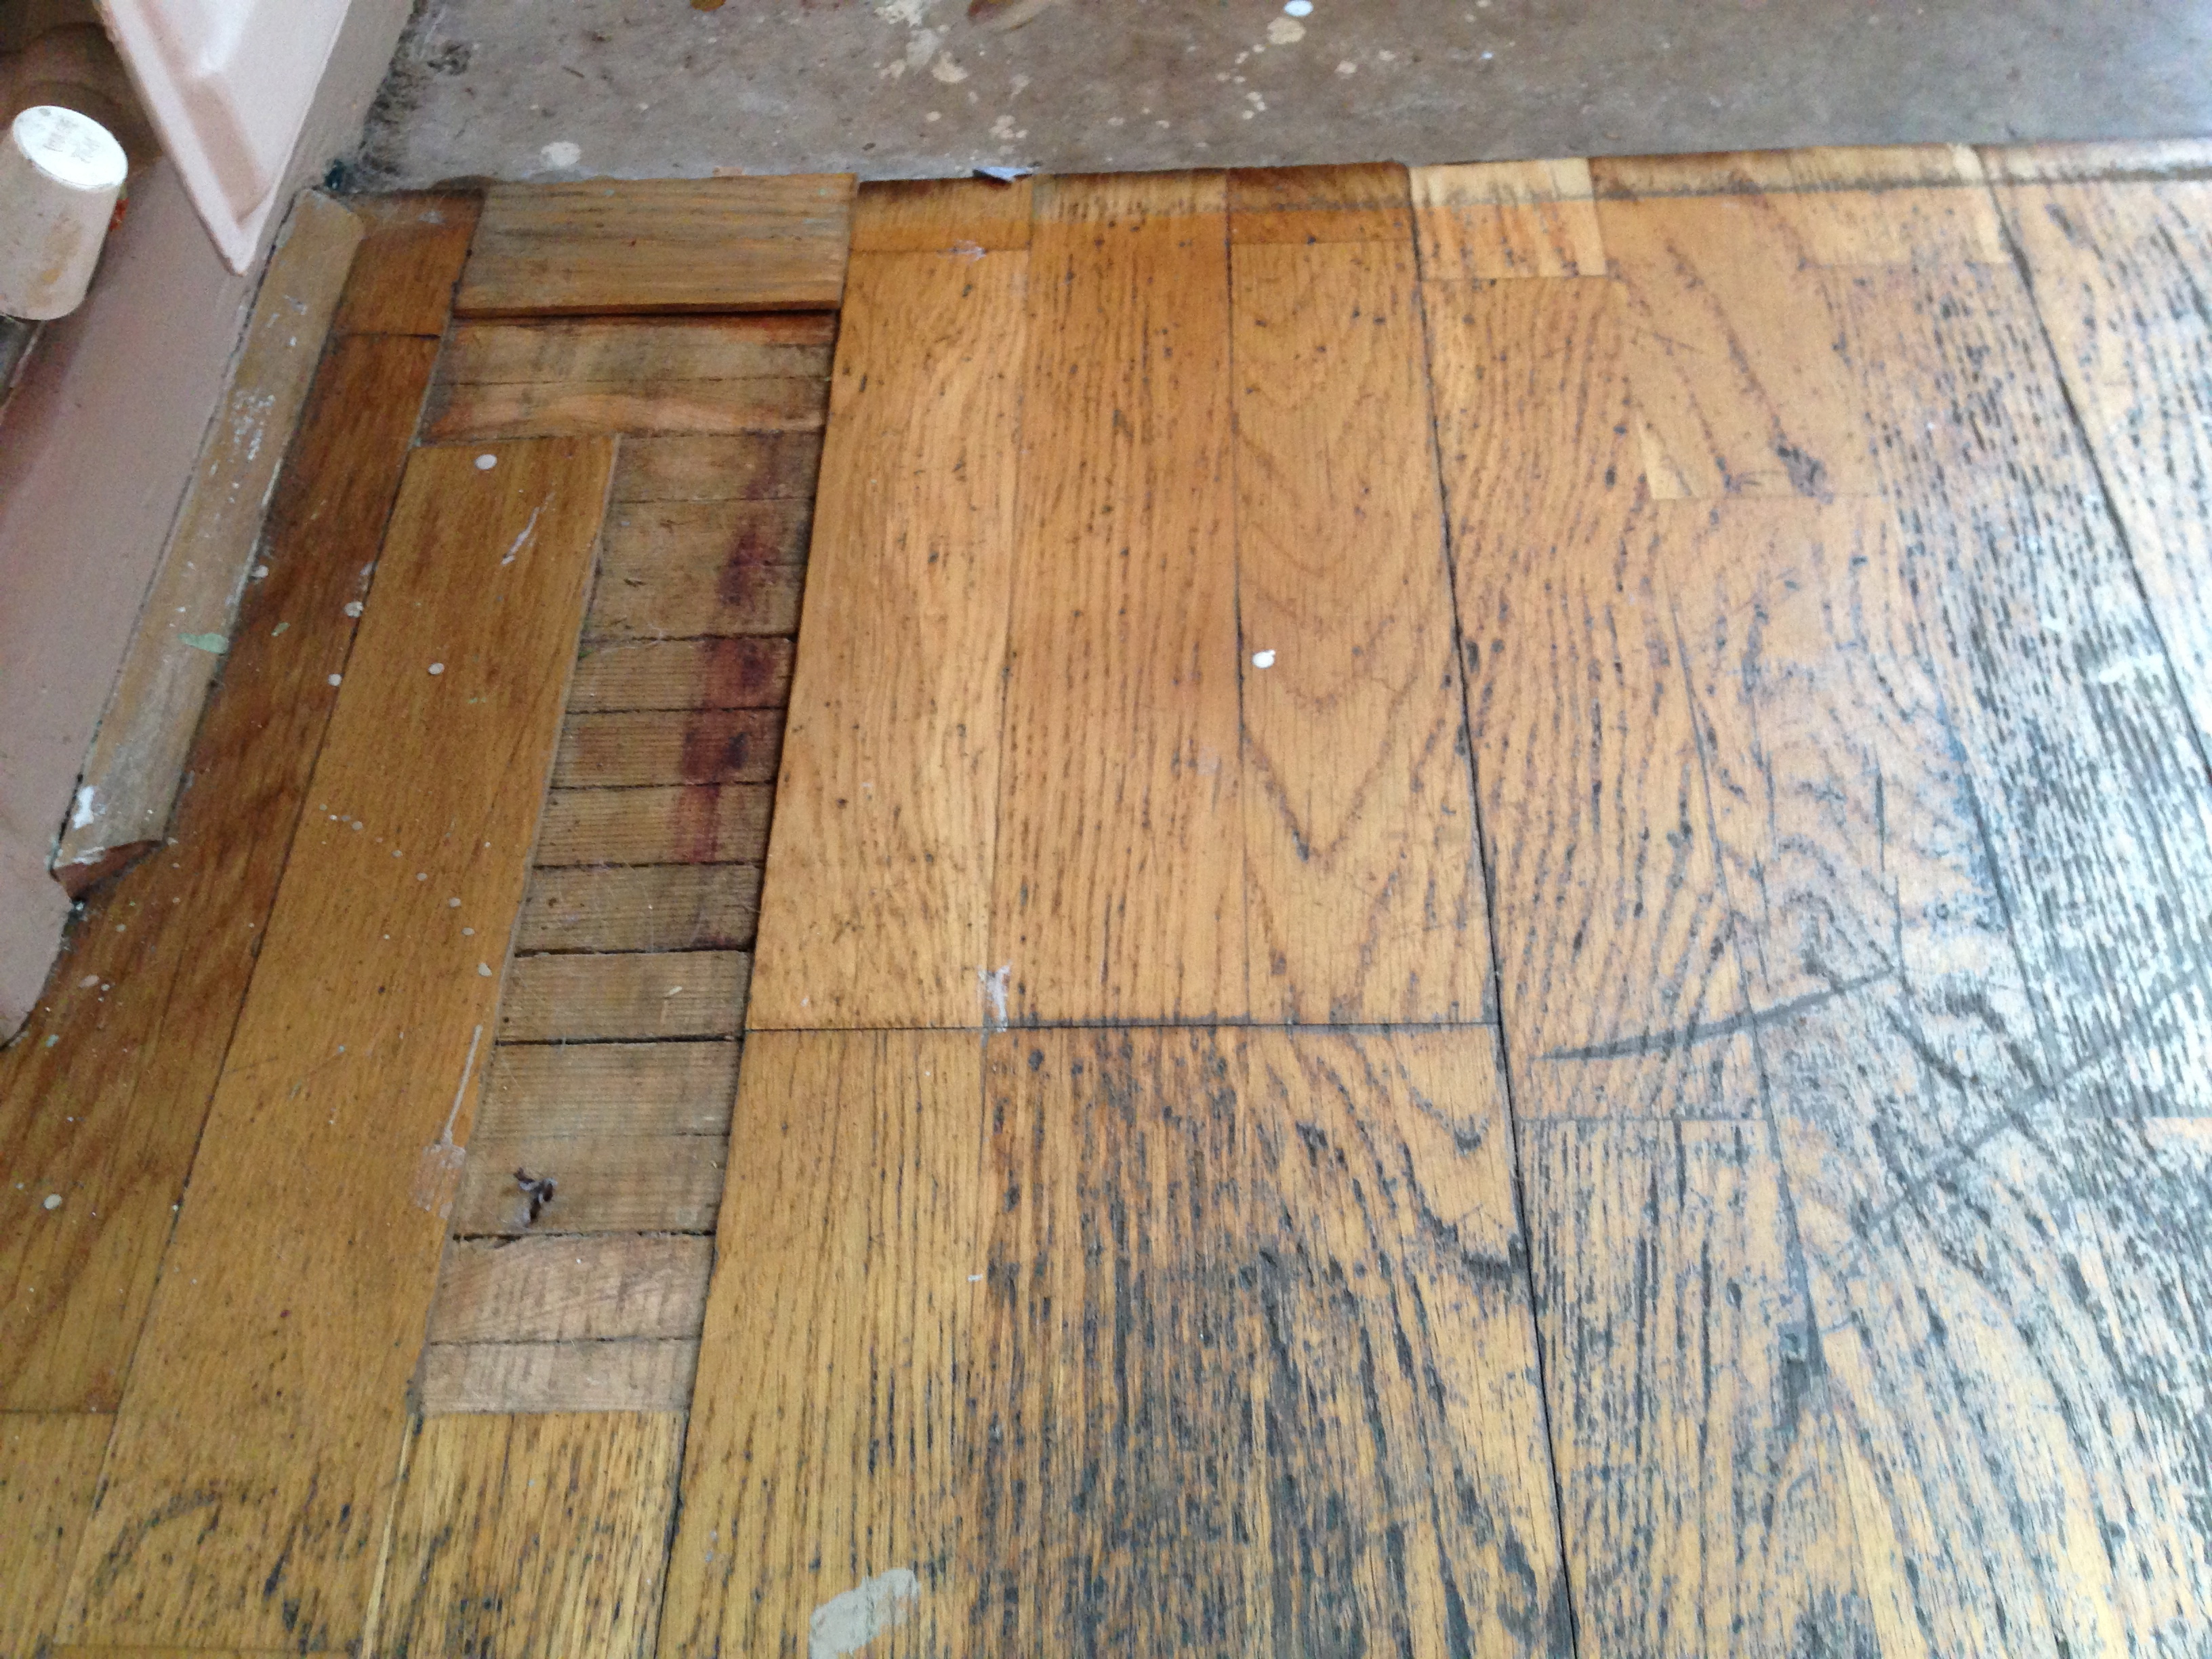 Oak laminate floor with missing laminate wood strips